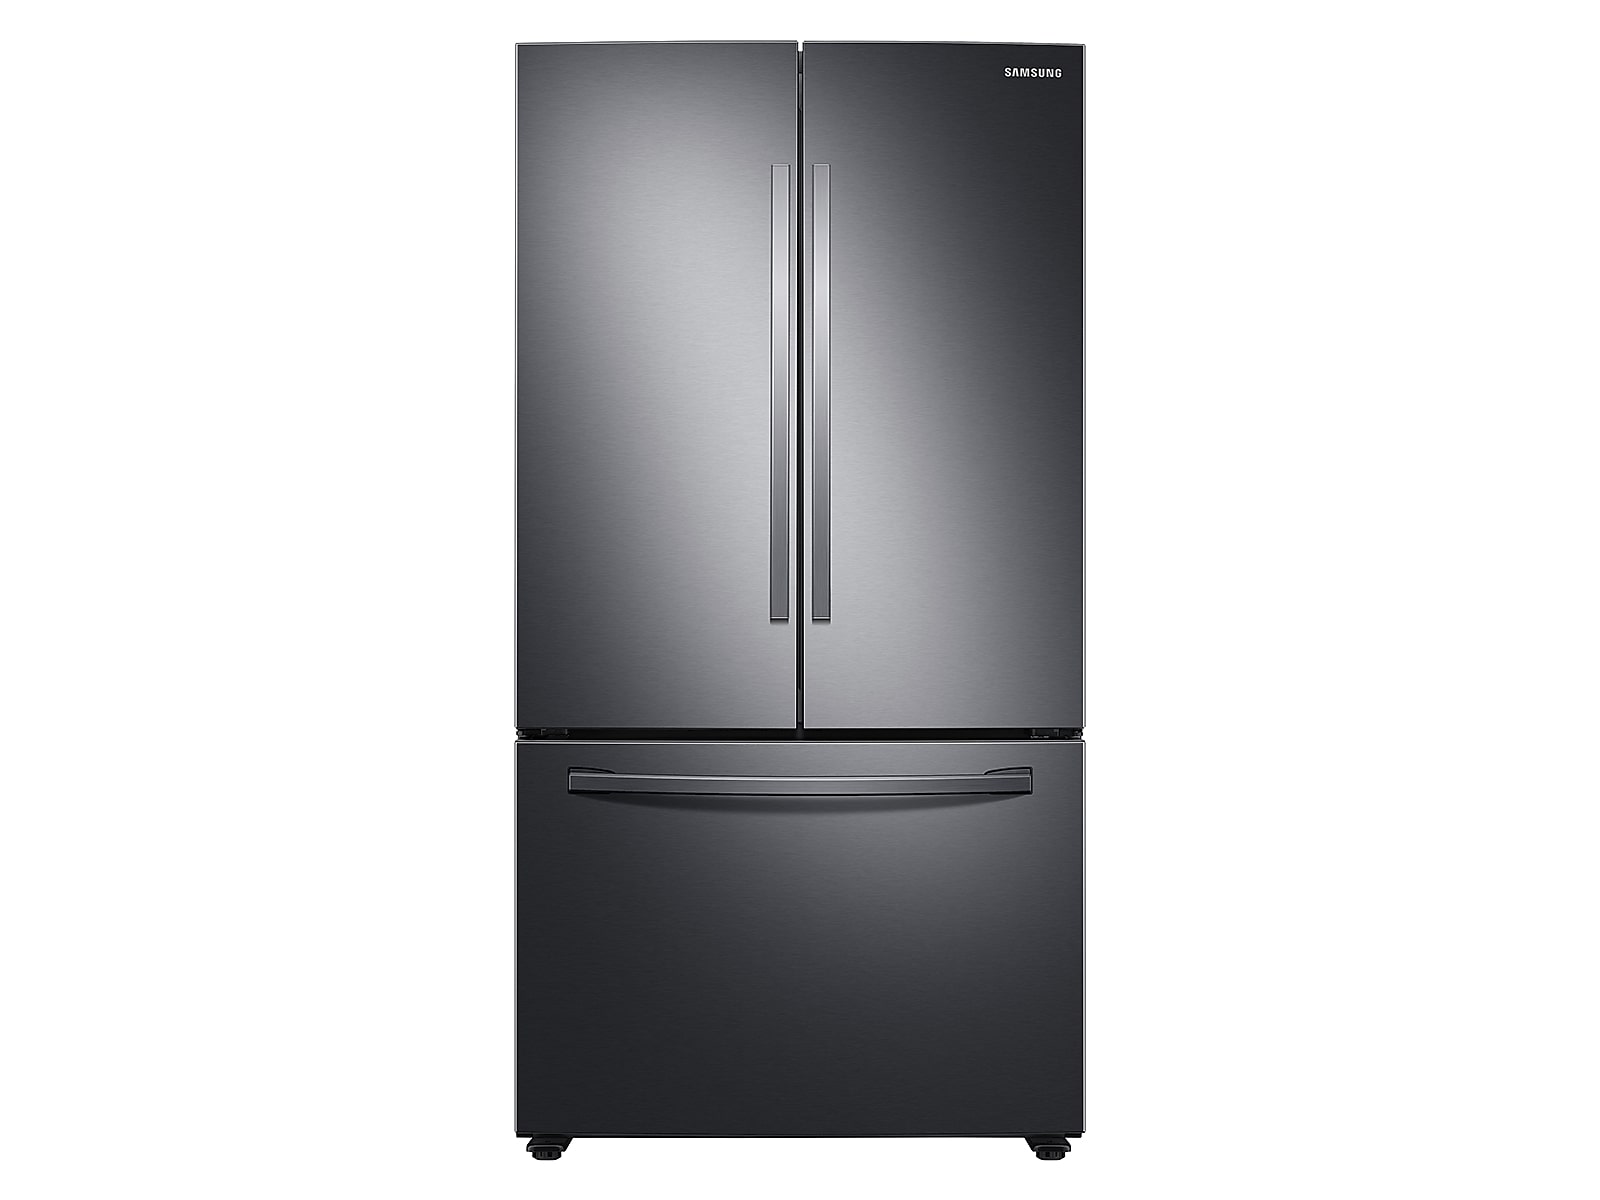 Samsung 28 cu. ft. Large Capacity 3-Door French Door Refrigerator with Internal Water Dispenser in Black Stainless Steel(RF28T5101SG/AA)